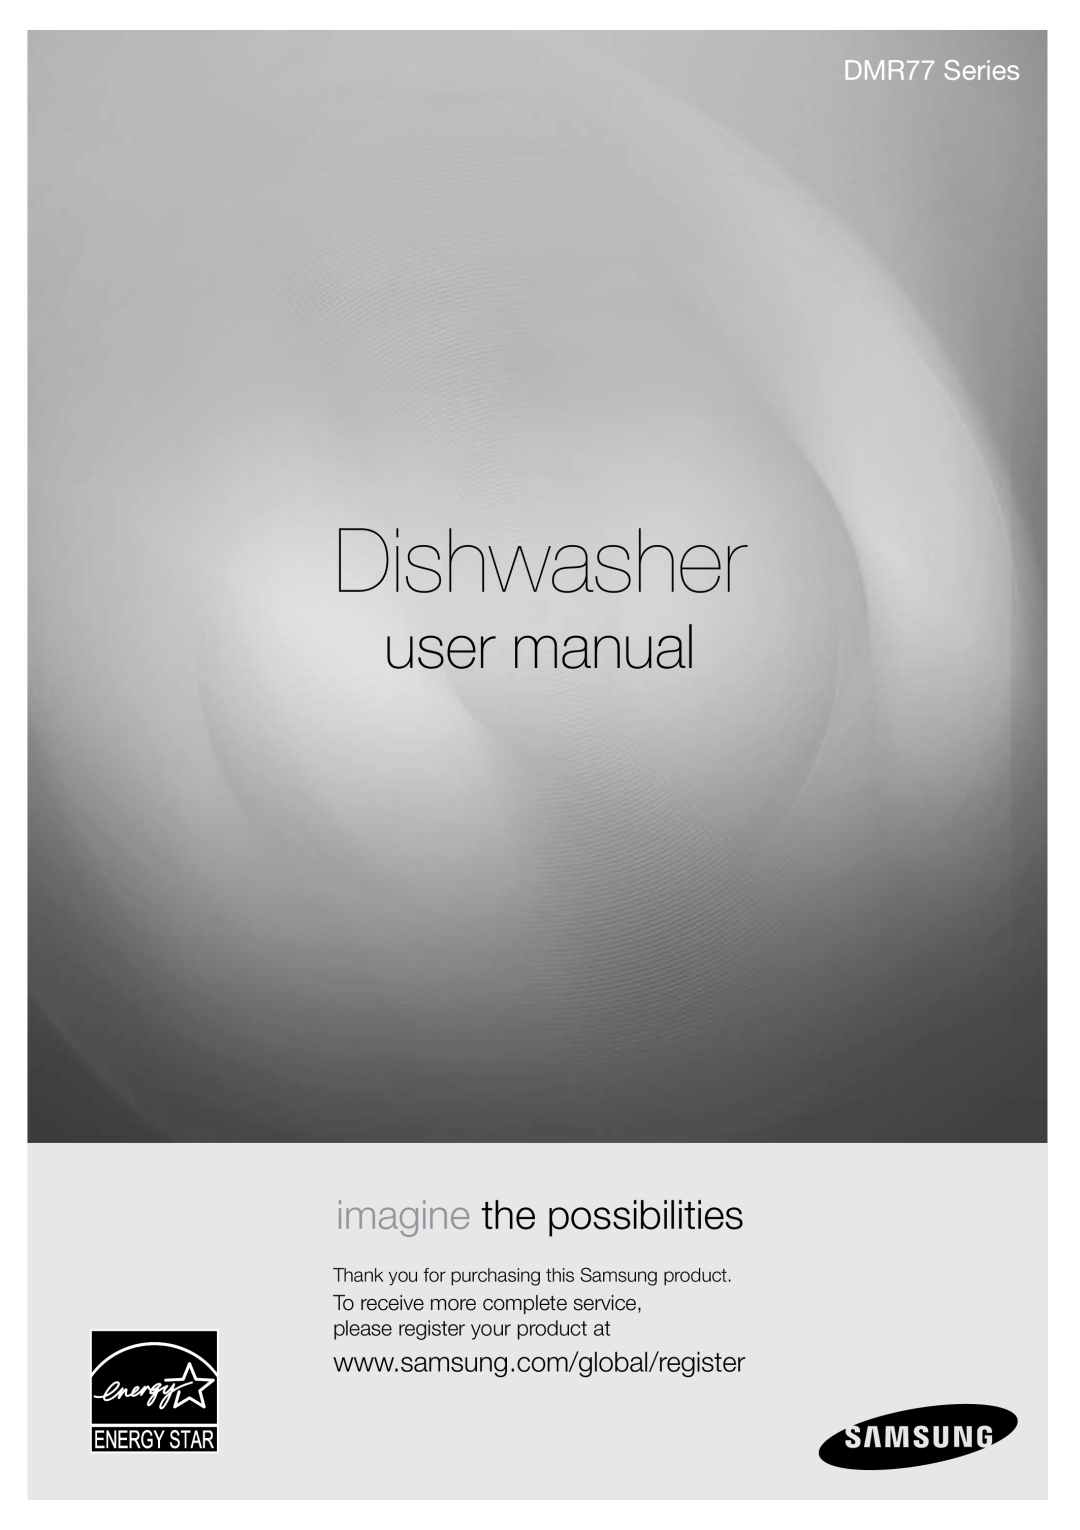 Samsung DMRLHW, DMRLHB, DMRLHS, DMR77LHS user manual Dishwasher, imagine the possibilities, DMR77 Series 